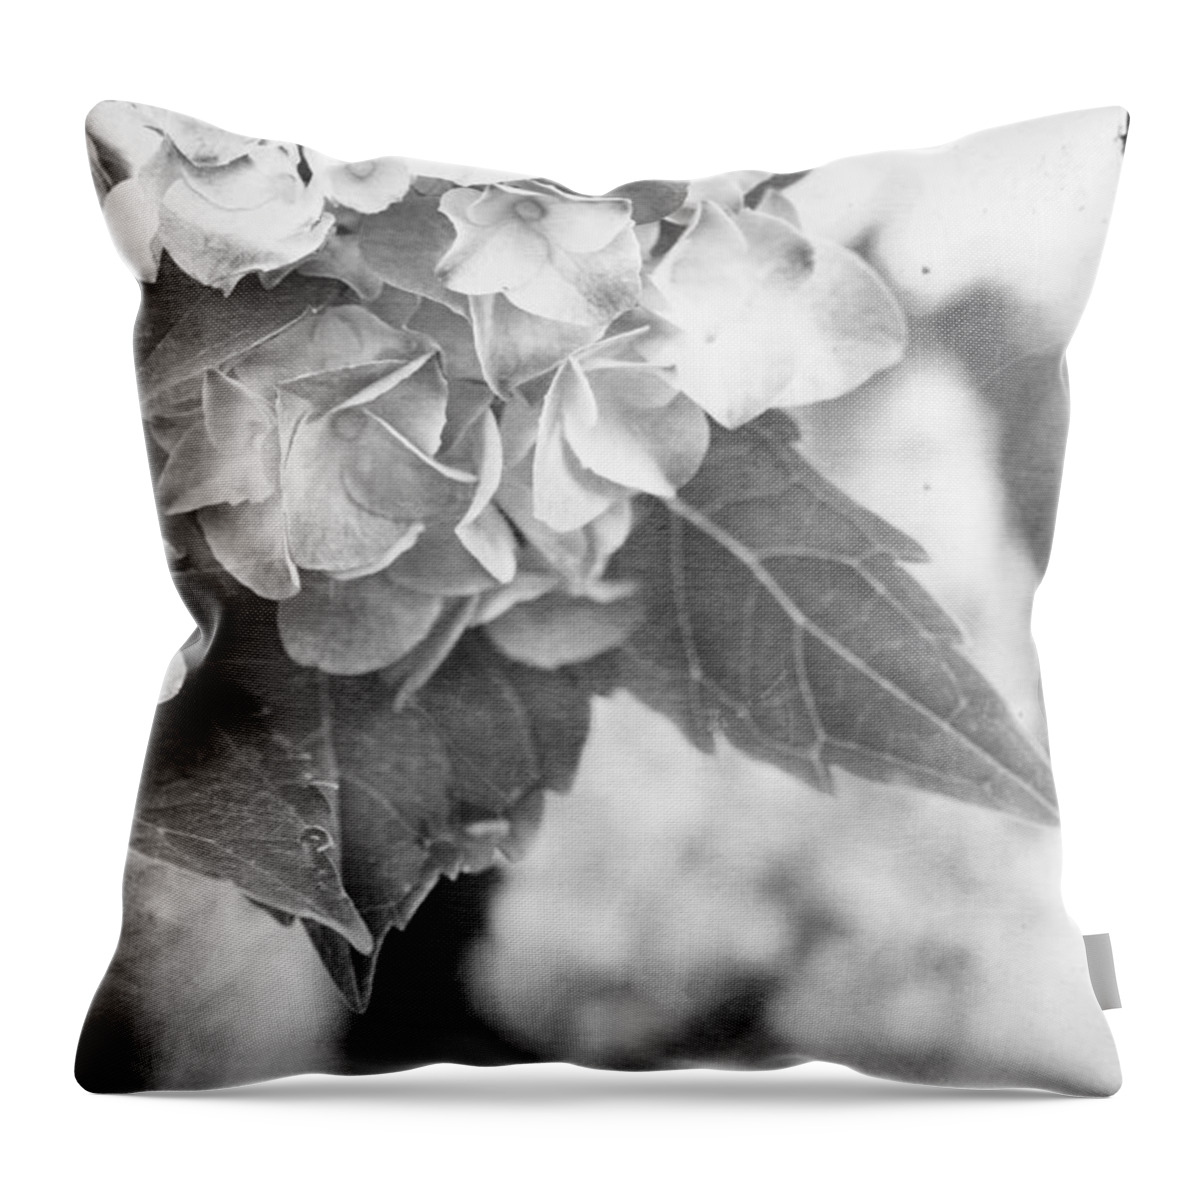 Hydrangea Throw Pillow featuring the photograph Hydrangeas #3 by Stephanie Frey